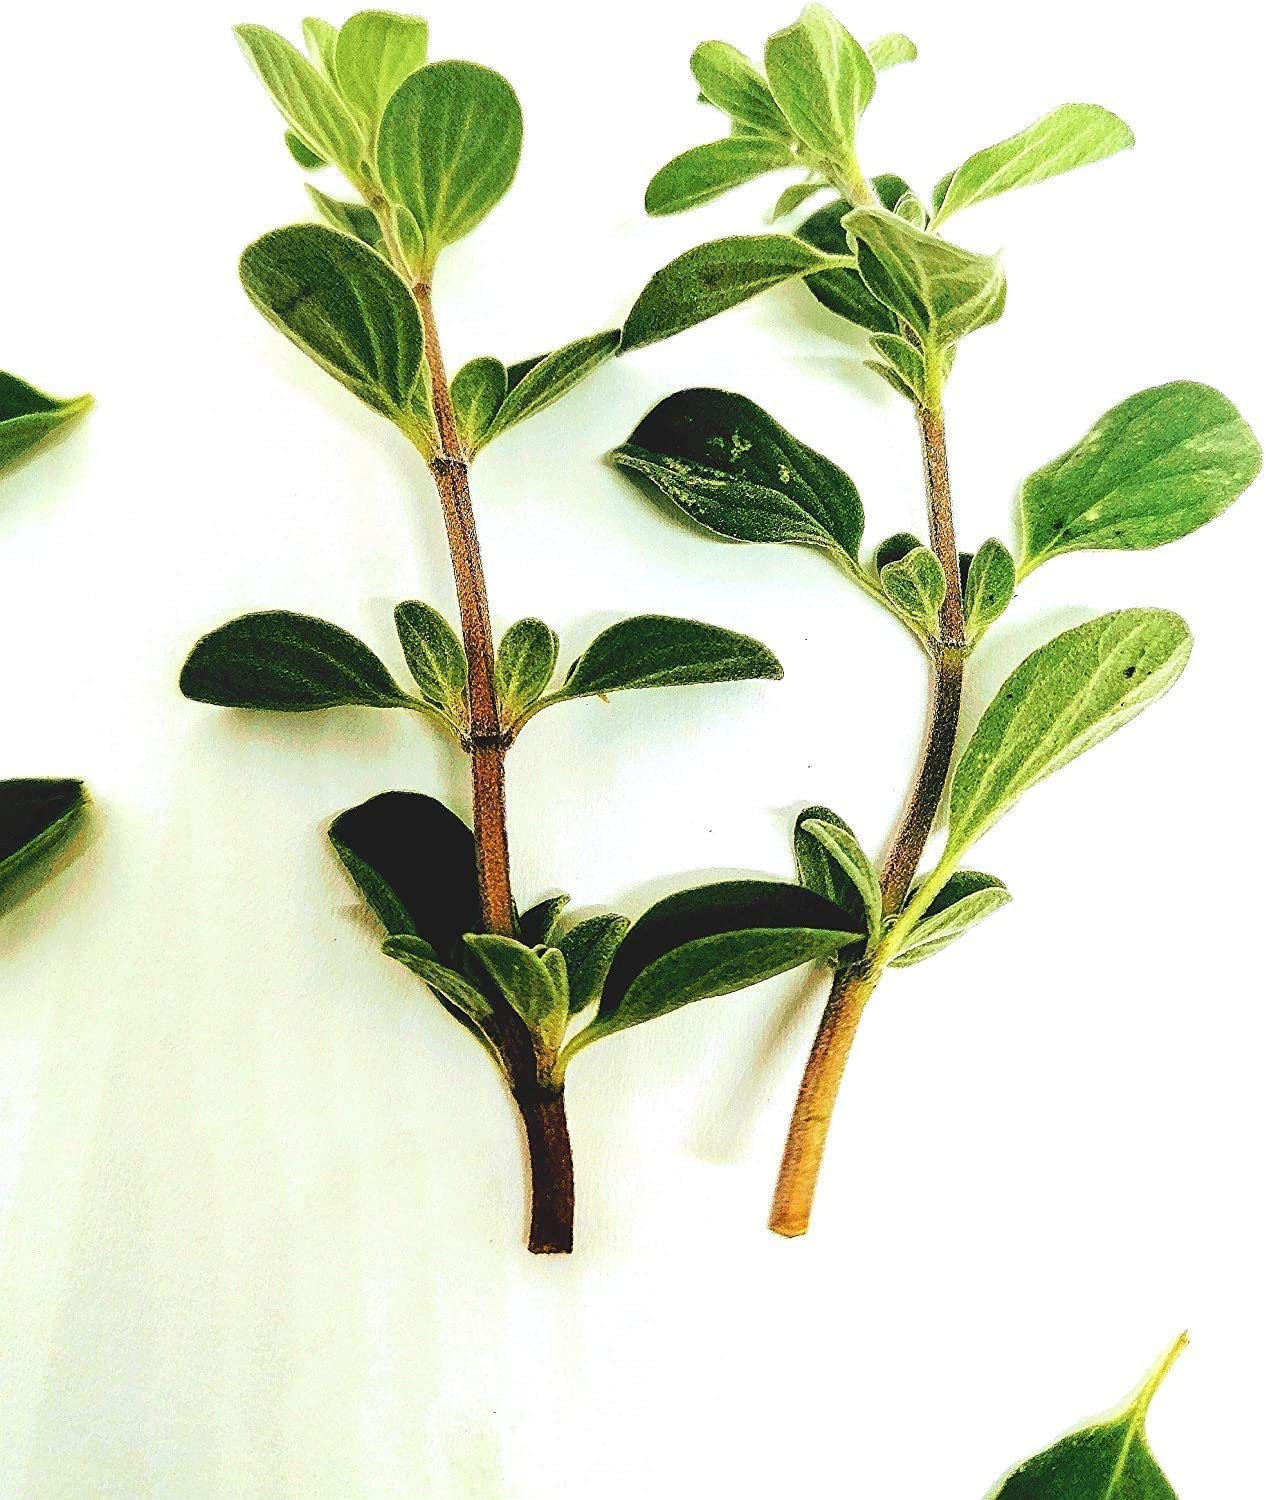 Hundredfold Sweet Marjoram 1000 Seeds - Origanum majorana Heirloom Non-GMO Culinary Herb & Spice